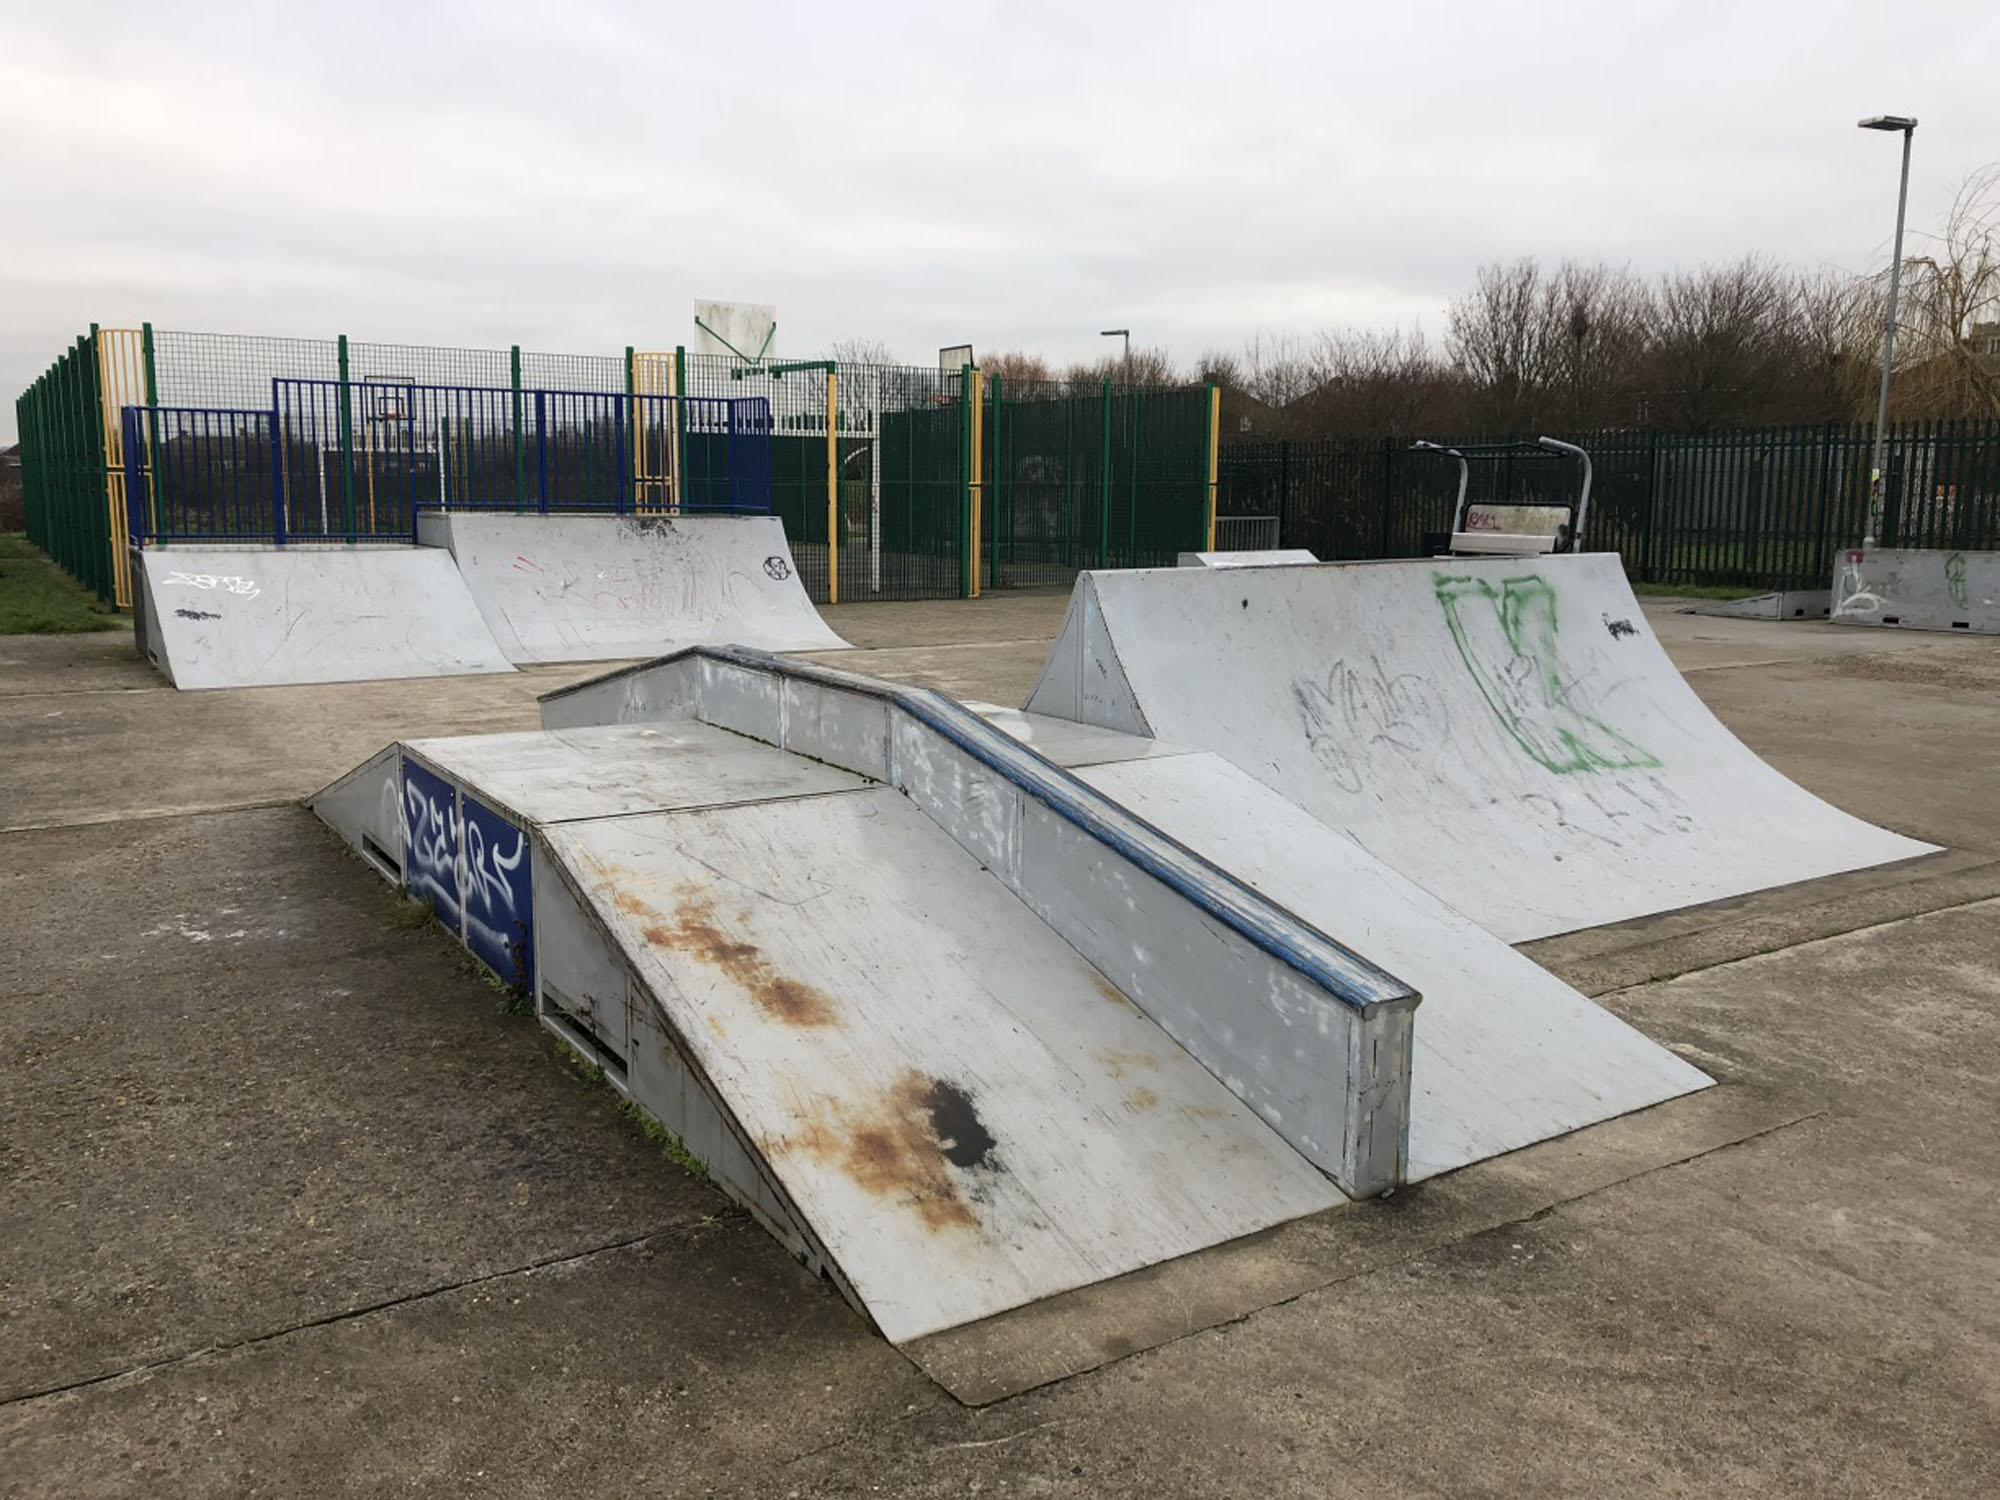 queensborough skatepark review tips skateboarding in kent u k